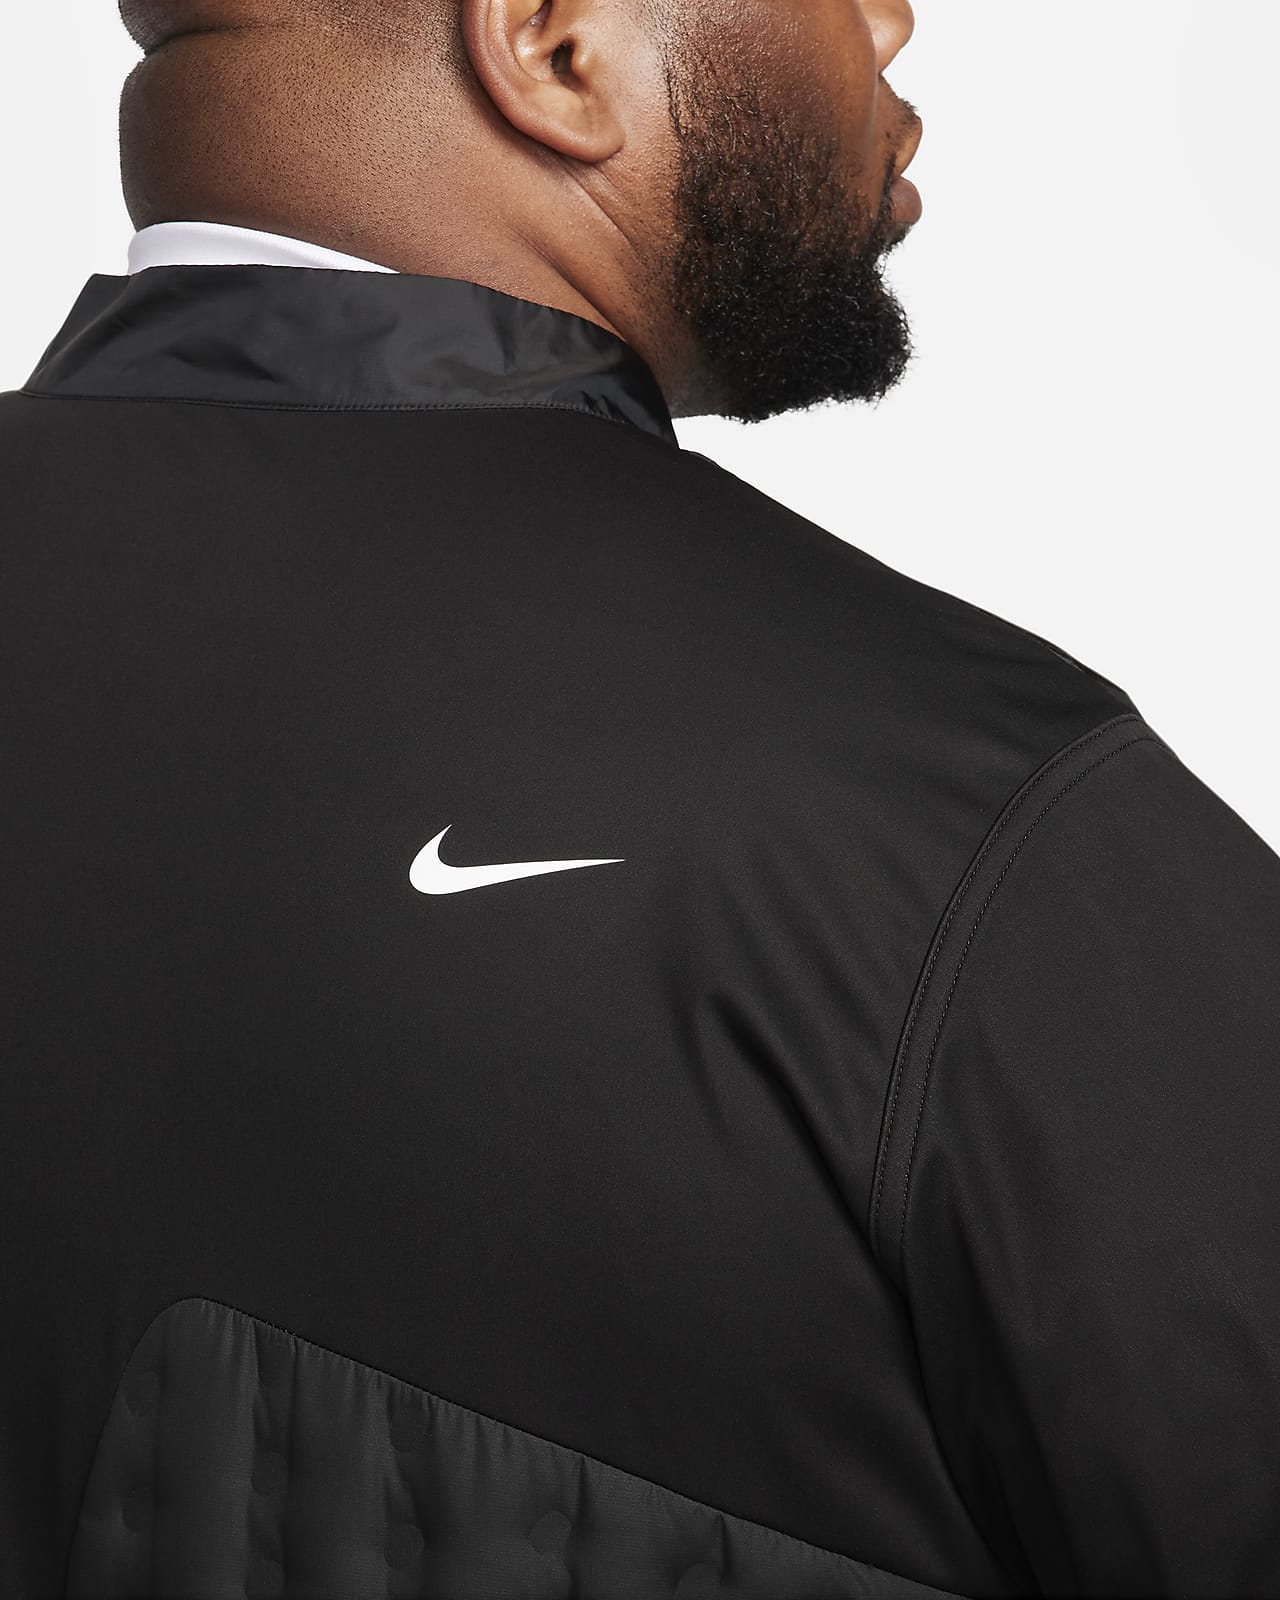 Therma-FIT Men\'s Golf ADV Nike Jacket. Repel 1/2-Zip